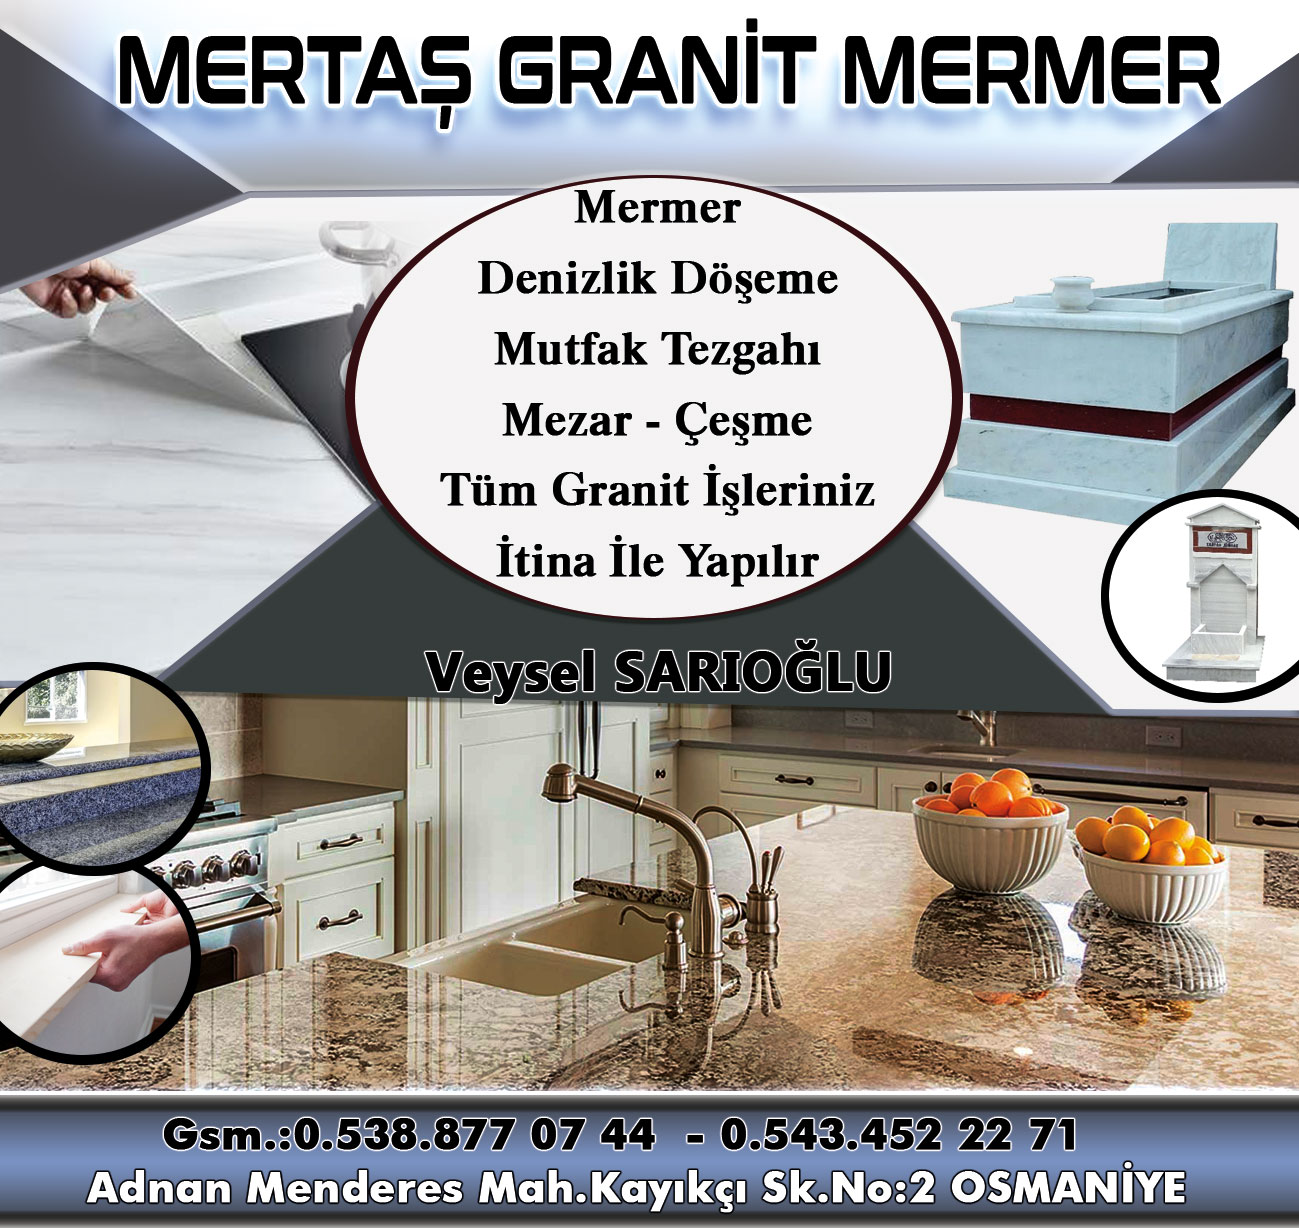 mertas-granit-mermer-osmaniye